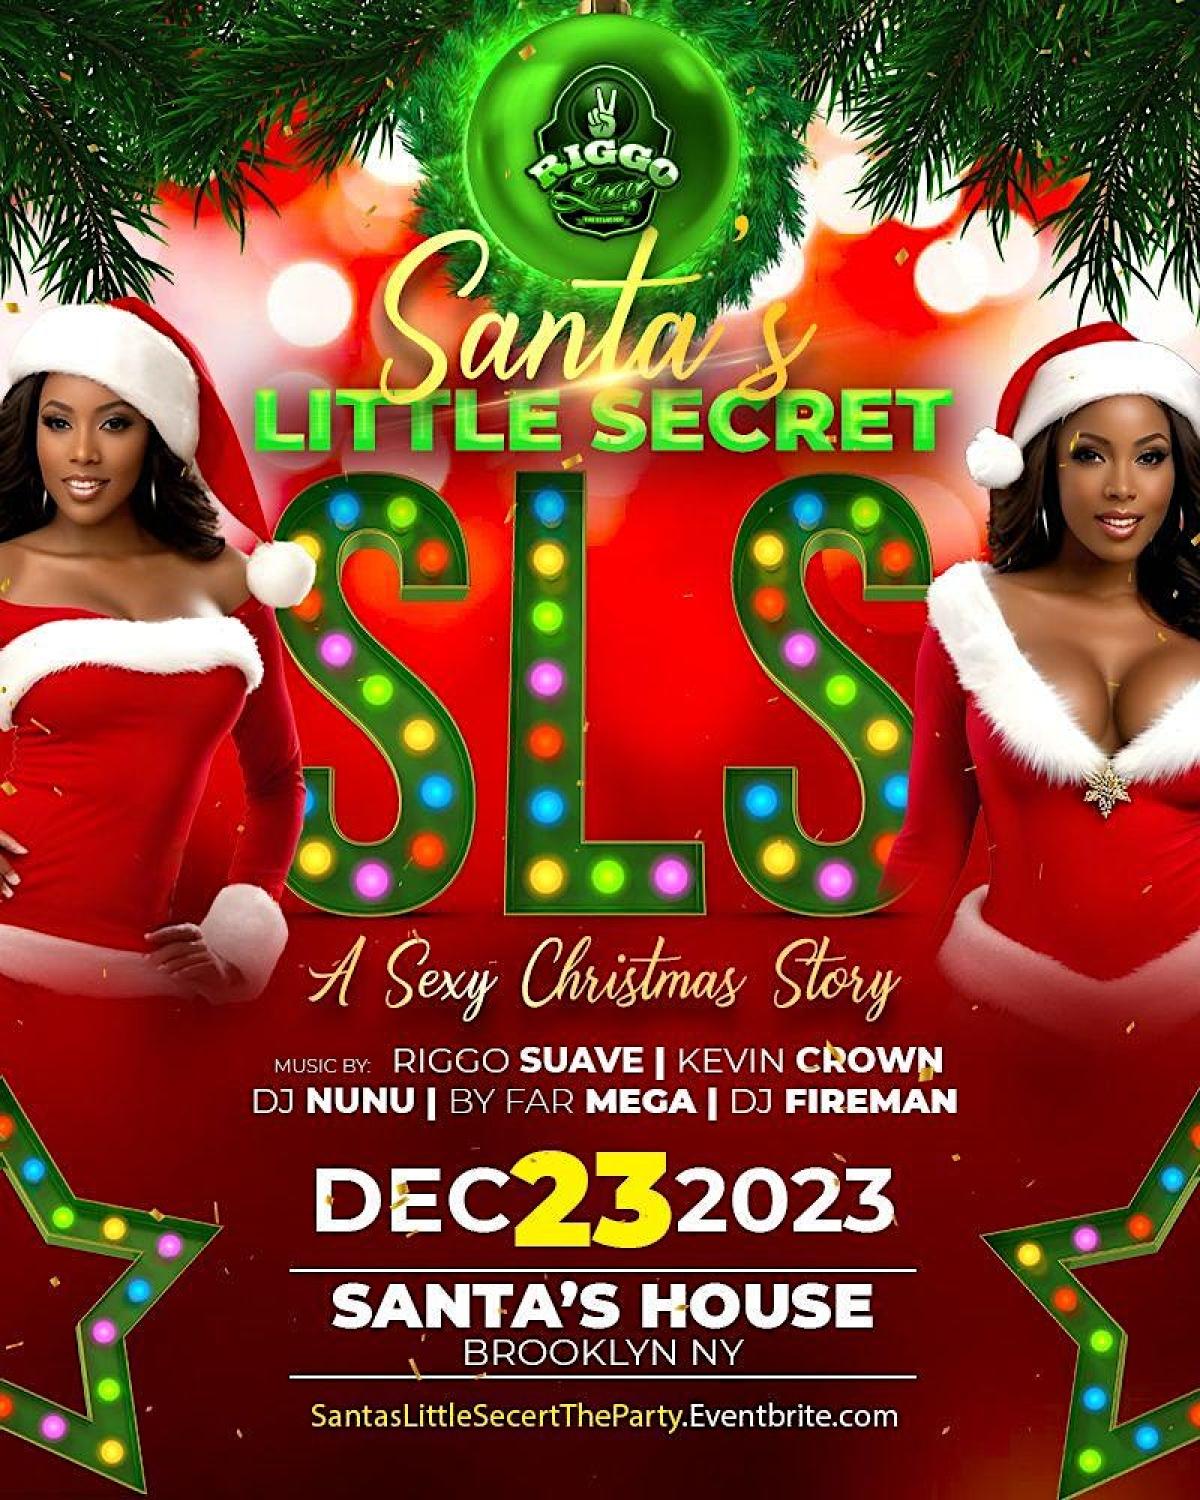 Santa's Little Secret SLS flyer or graphic.